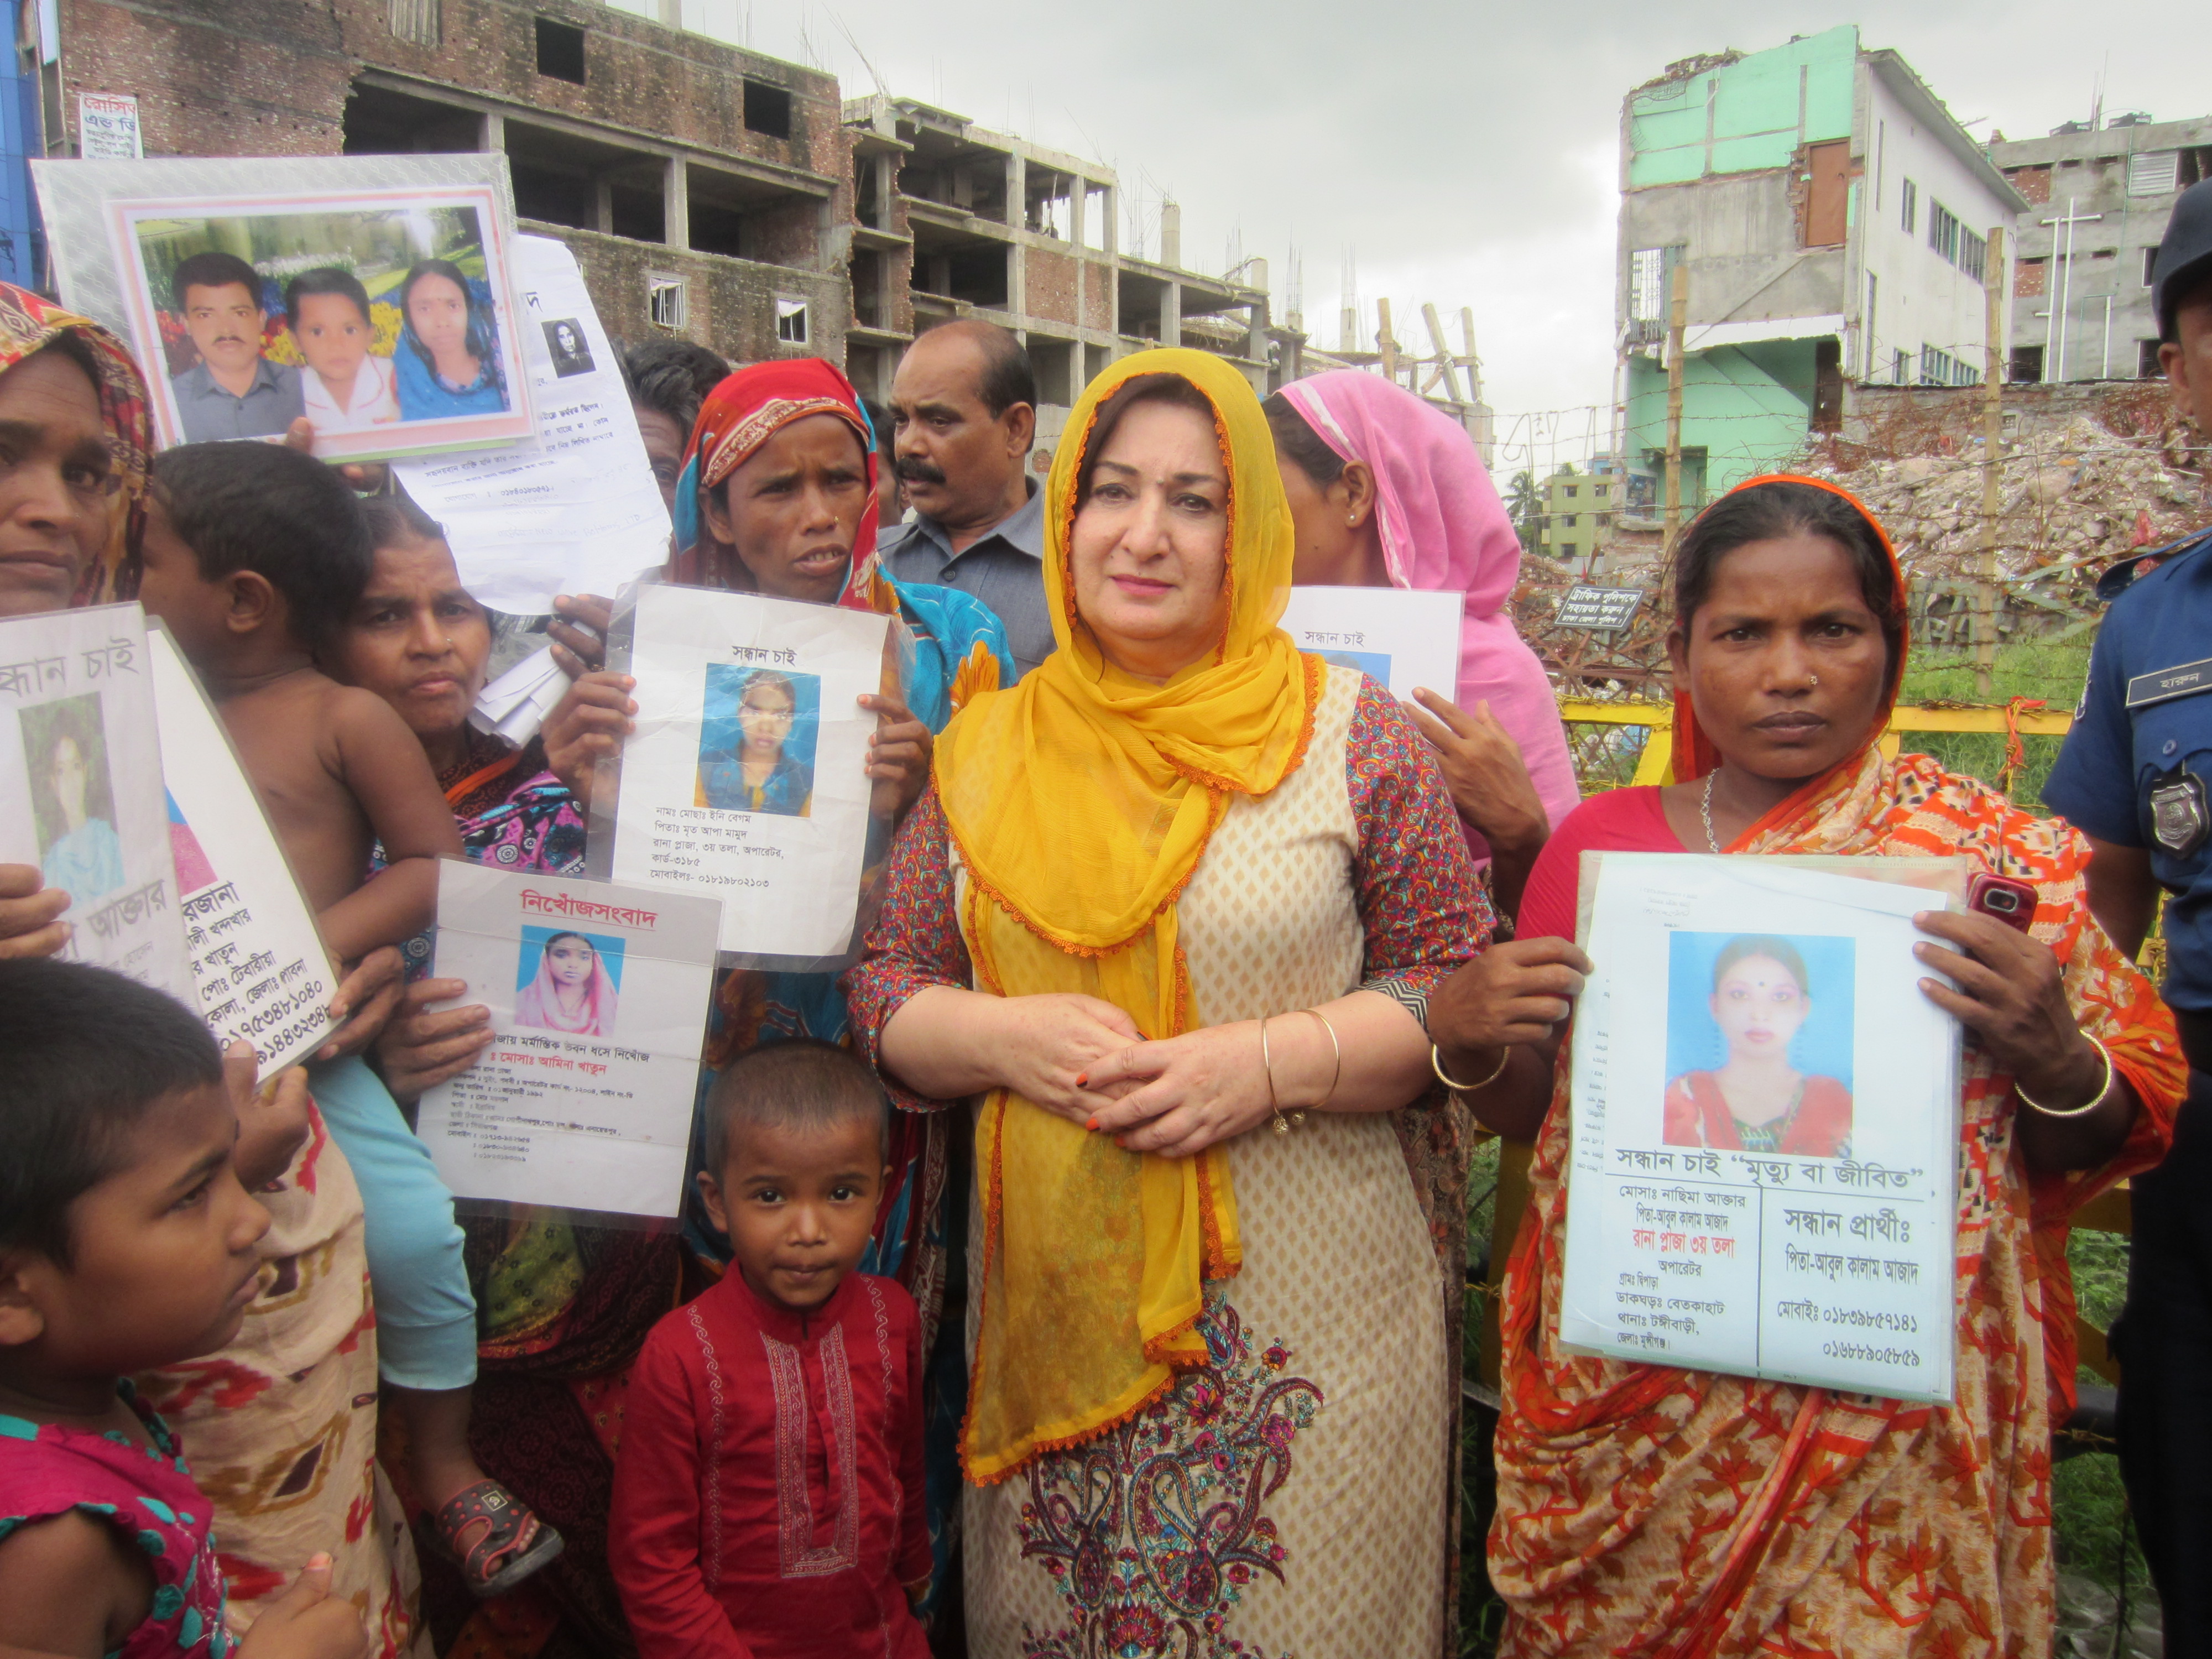 Senator Ataullahjan visited the site of the Rana Plaza collapse in Dhaka, Bangladesh in July of 2013.